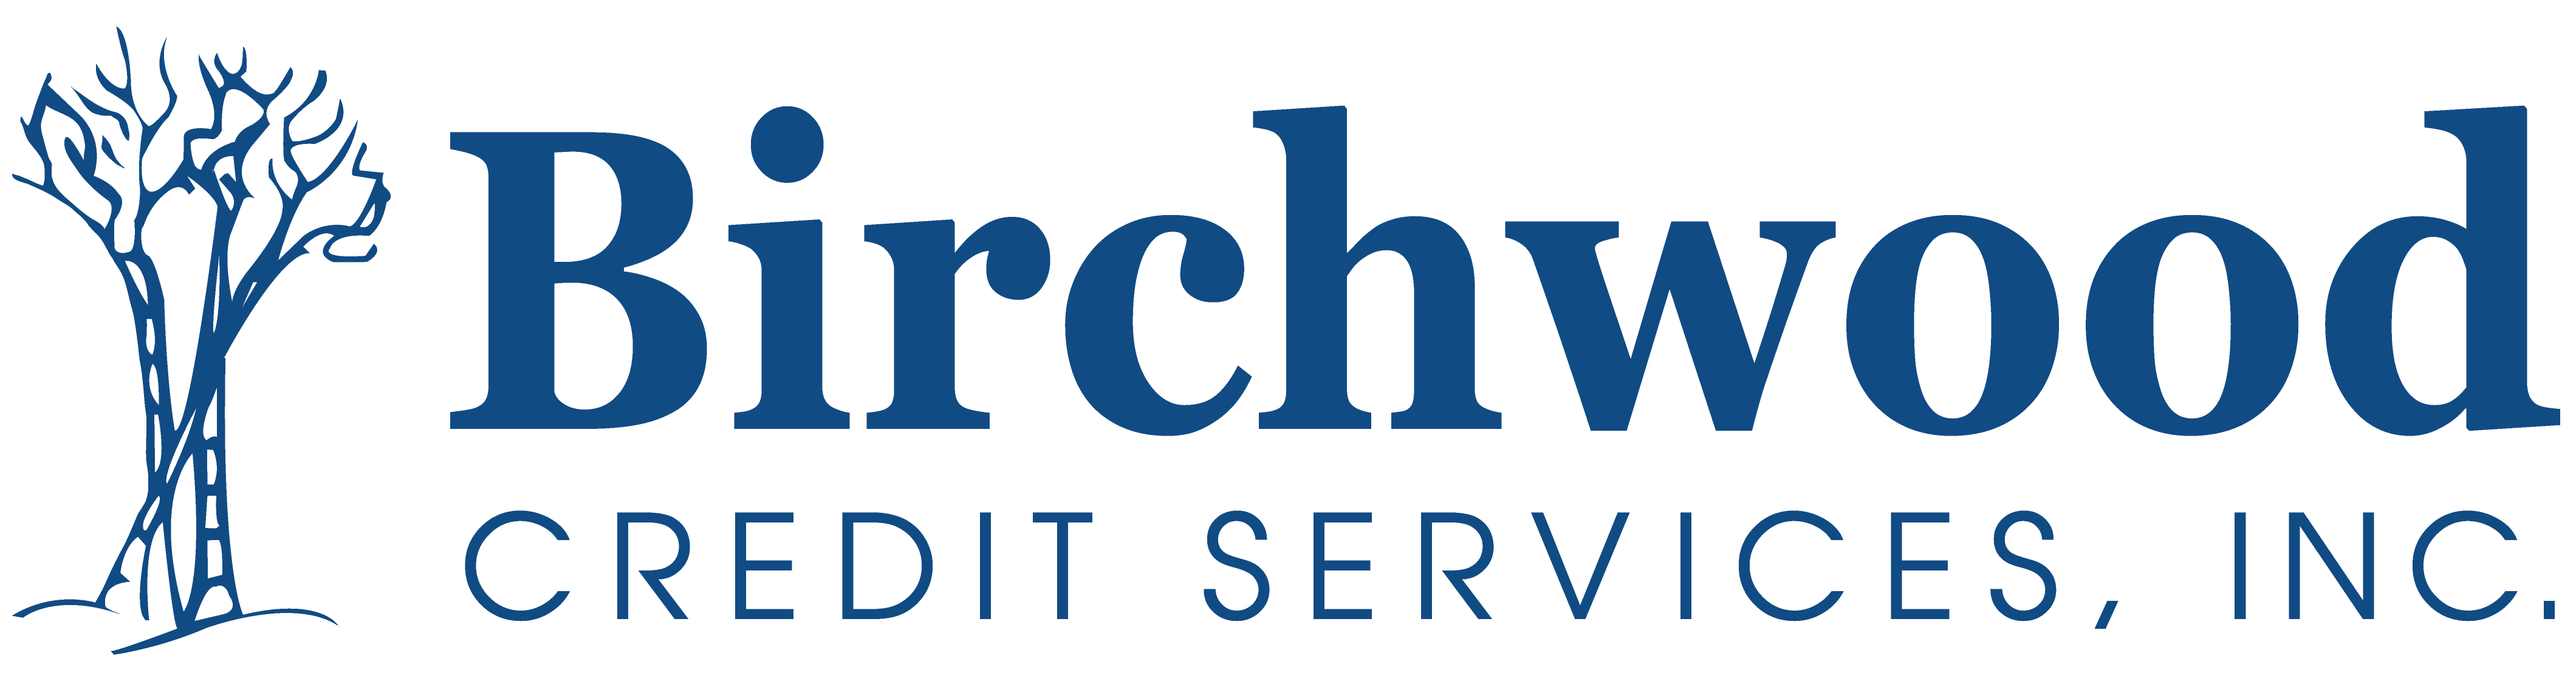 Birchwood Credit Services